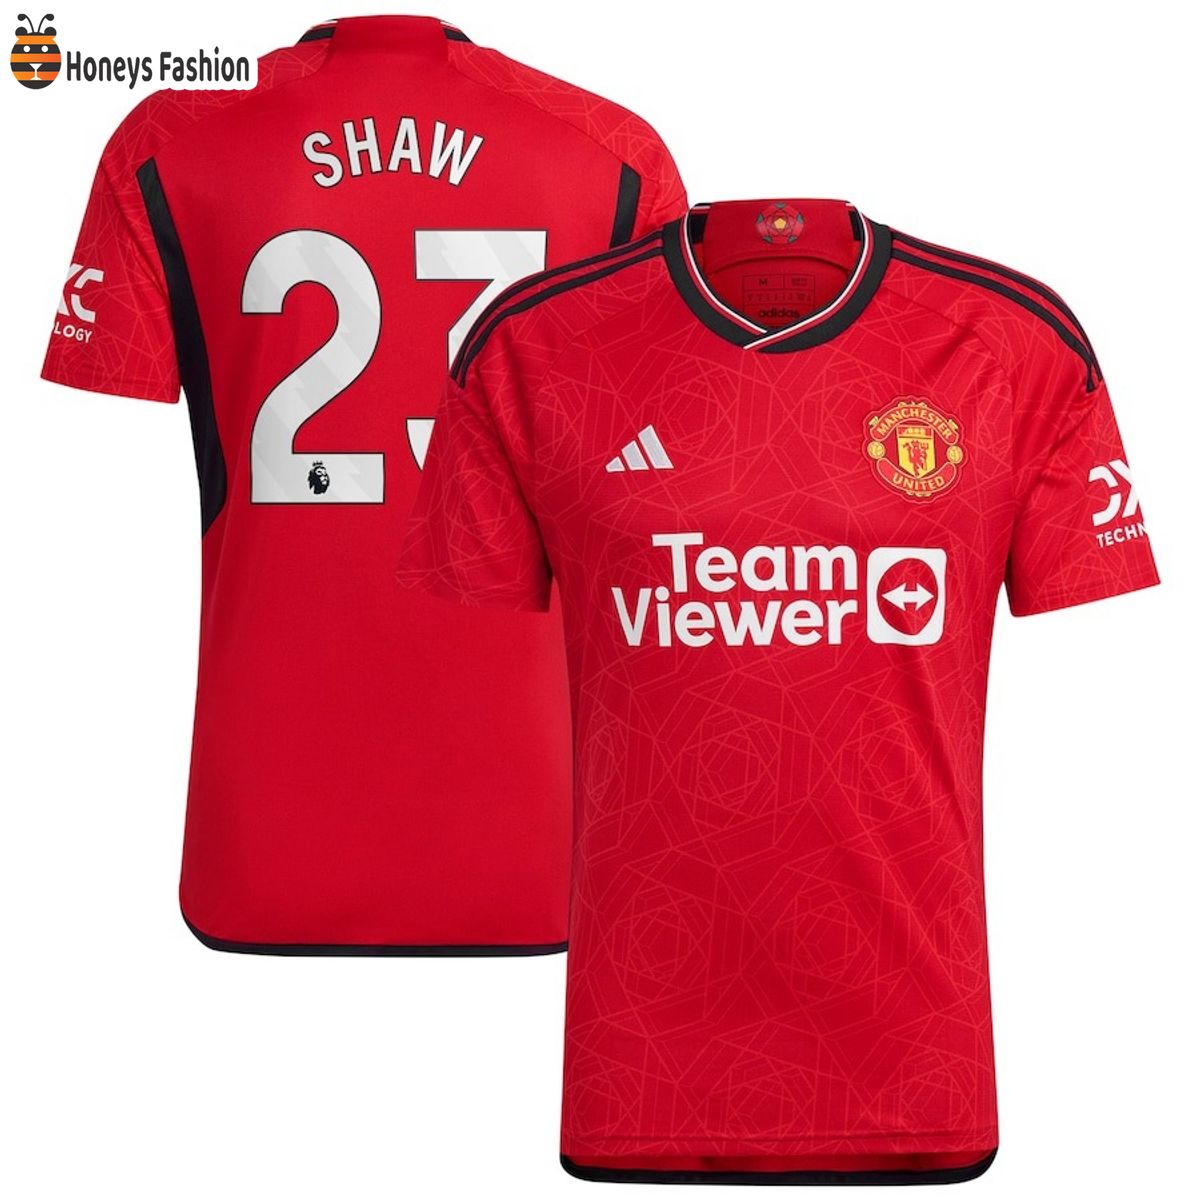 Shaw 23 Manchester United Premier League 23-24 Jersey